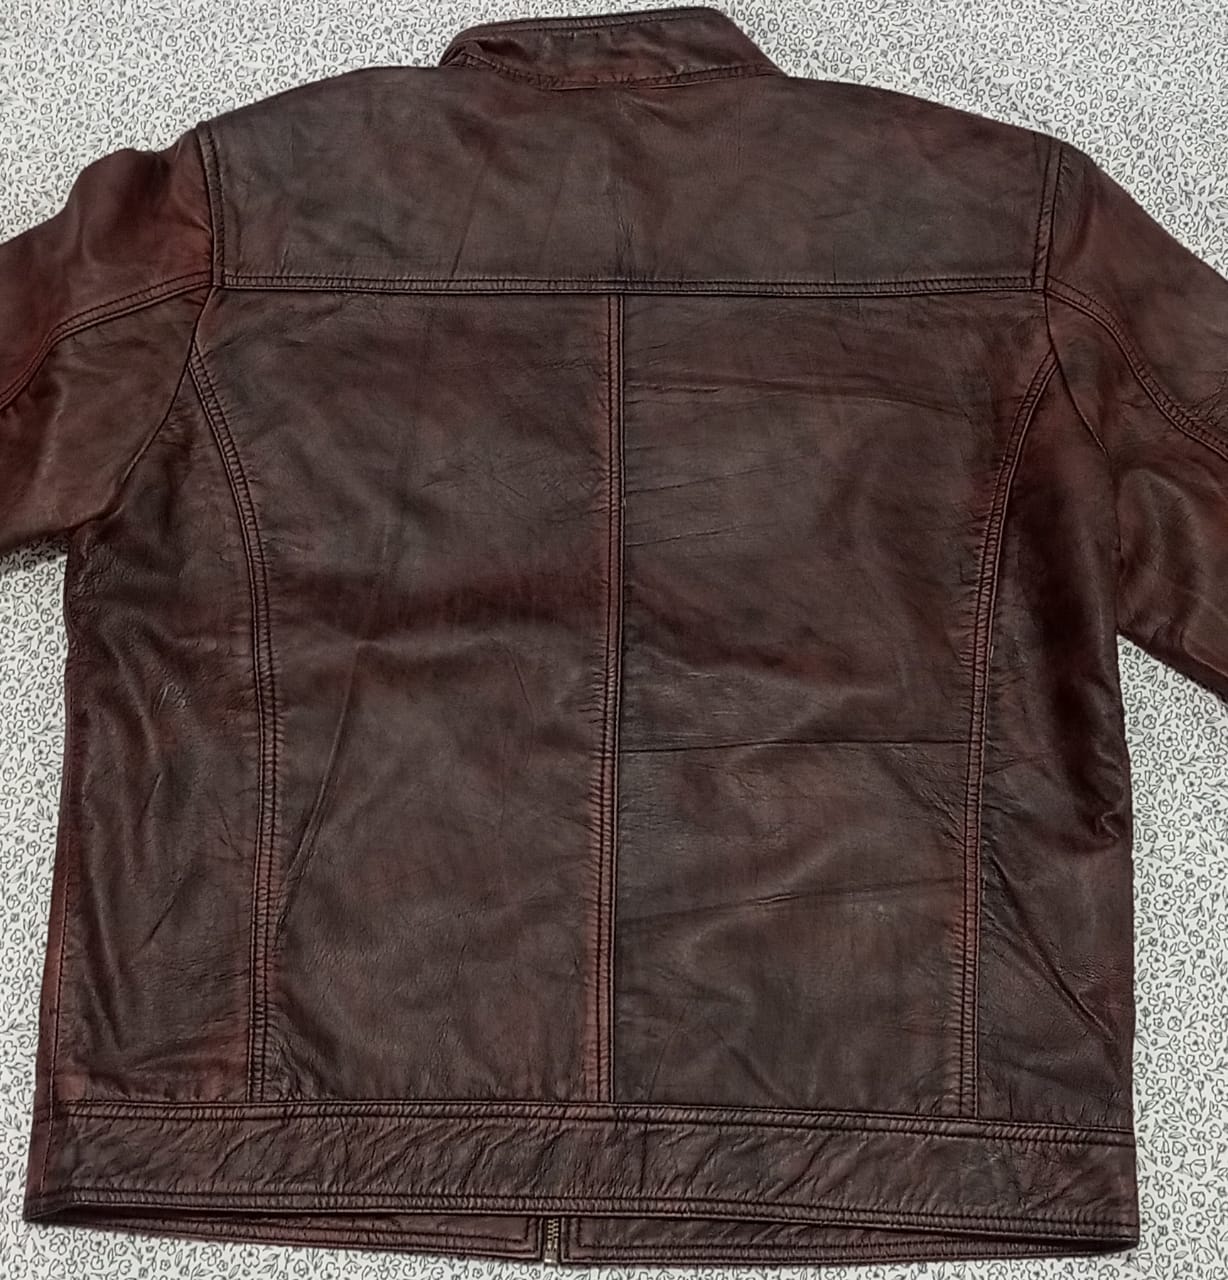 Leather Jacket for Men in Vintage Article.